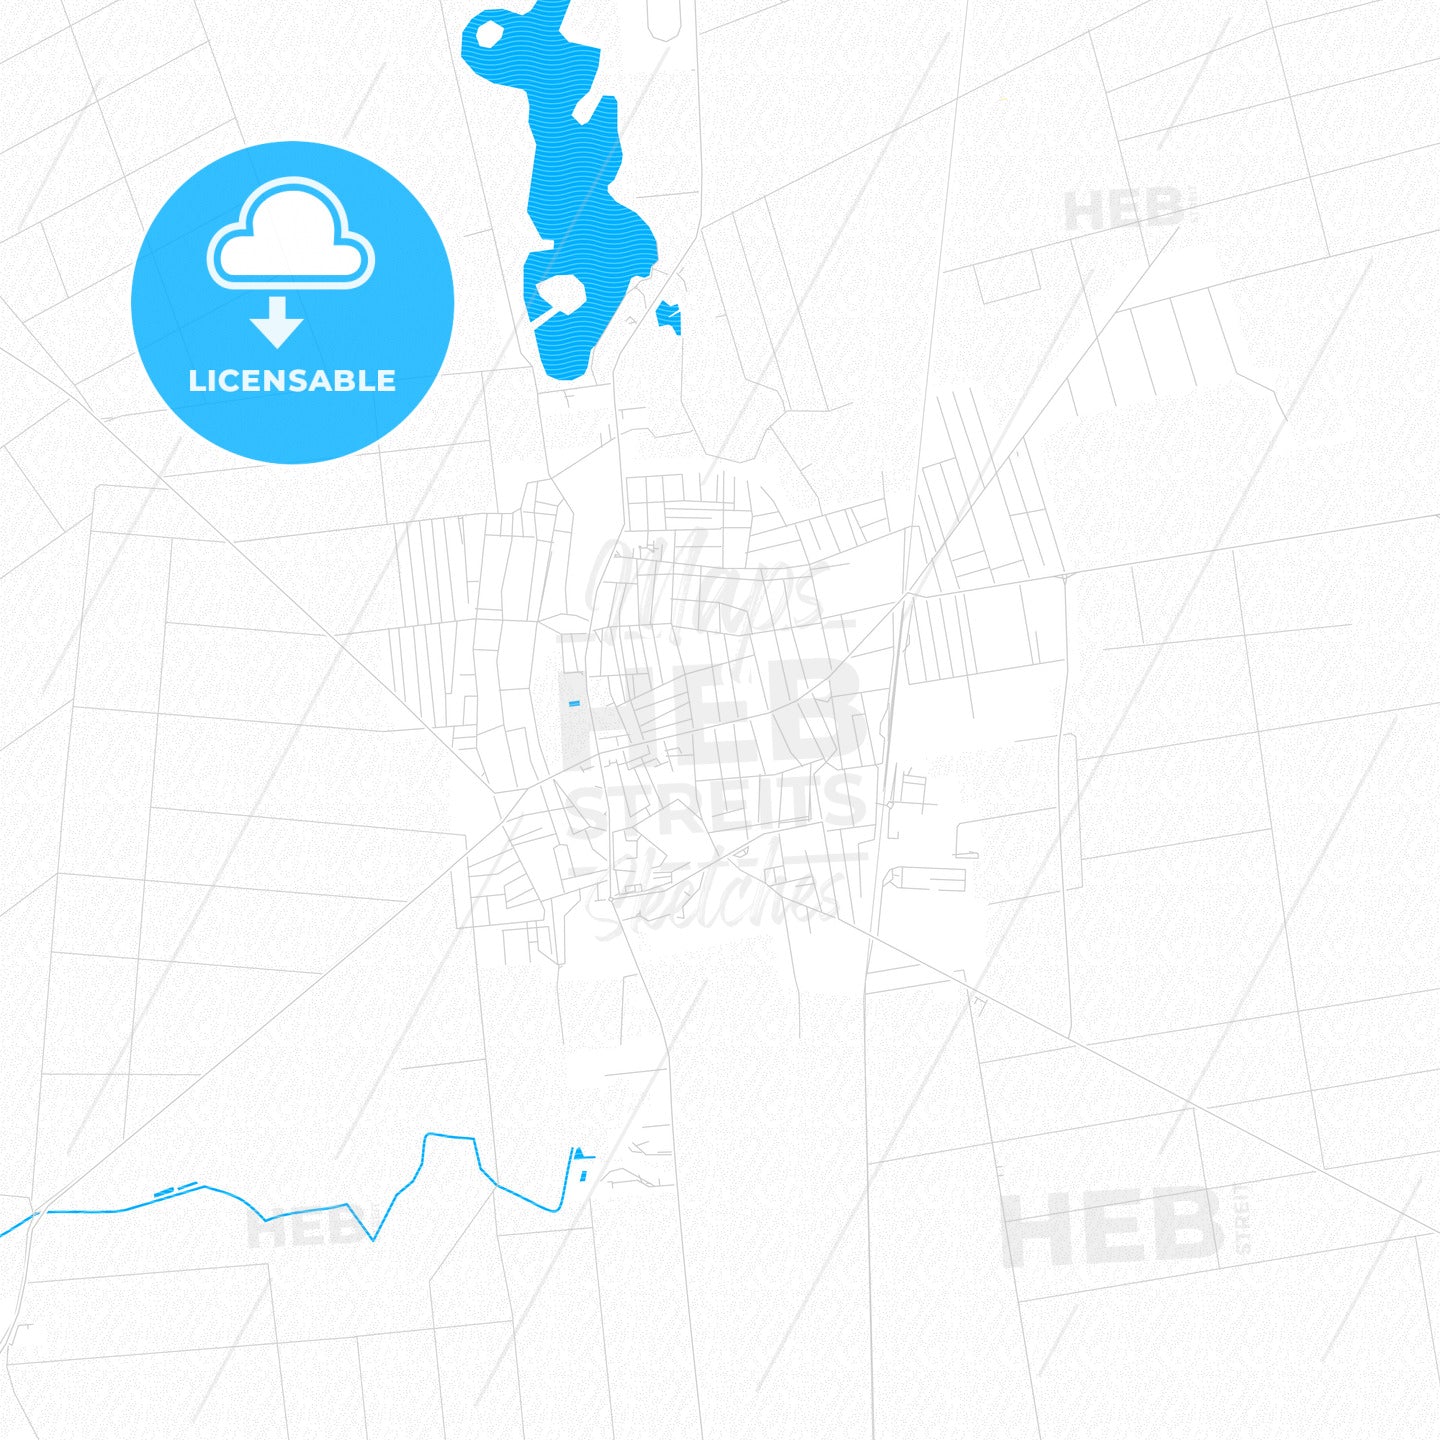 Bačka Topola, Serbia PDF vector map with water in focus